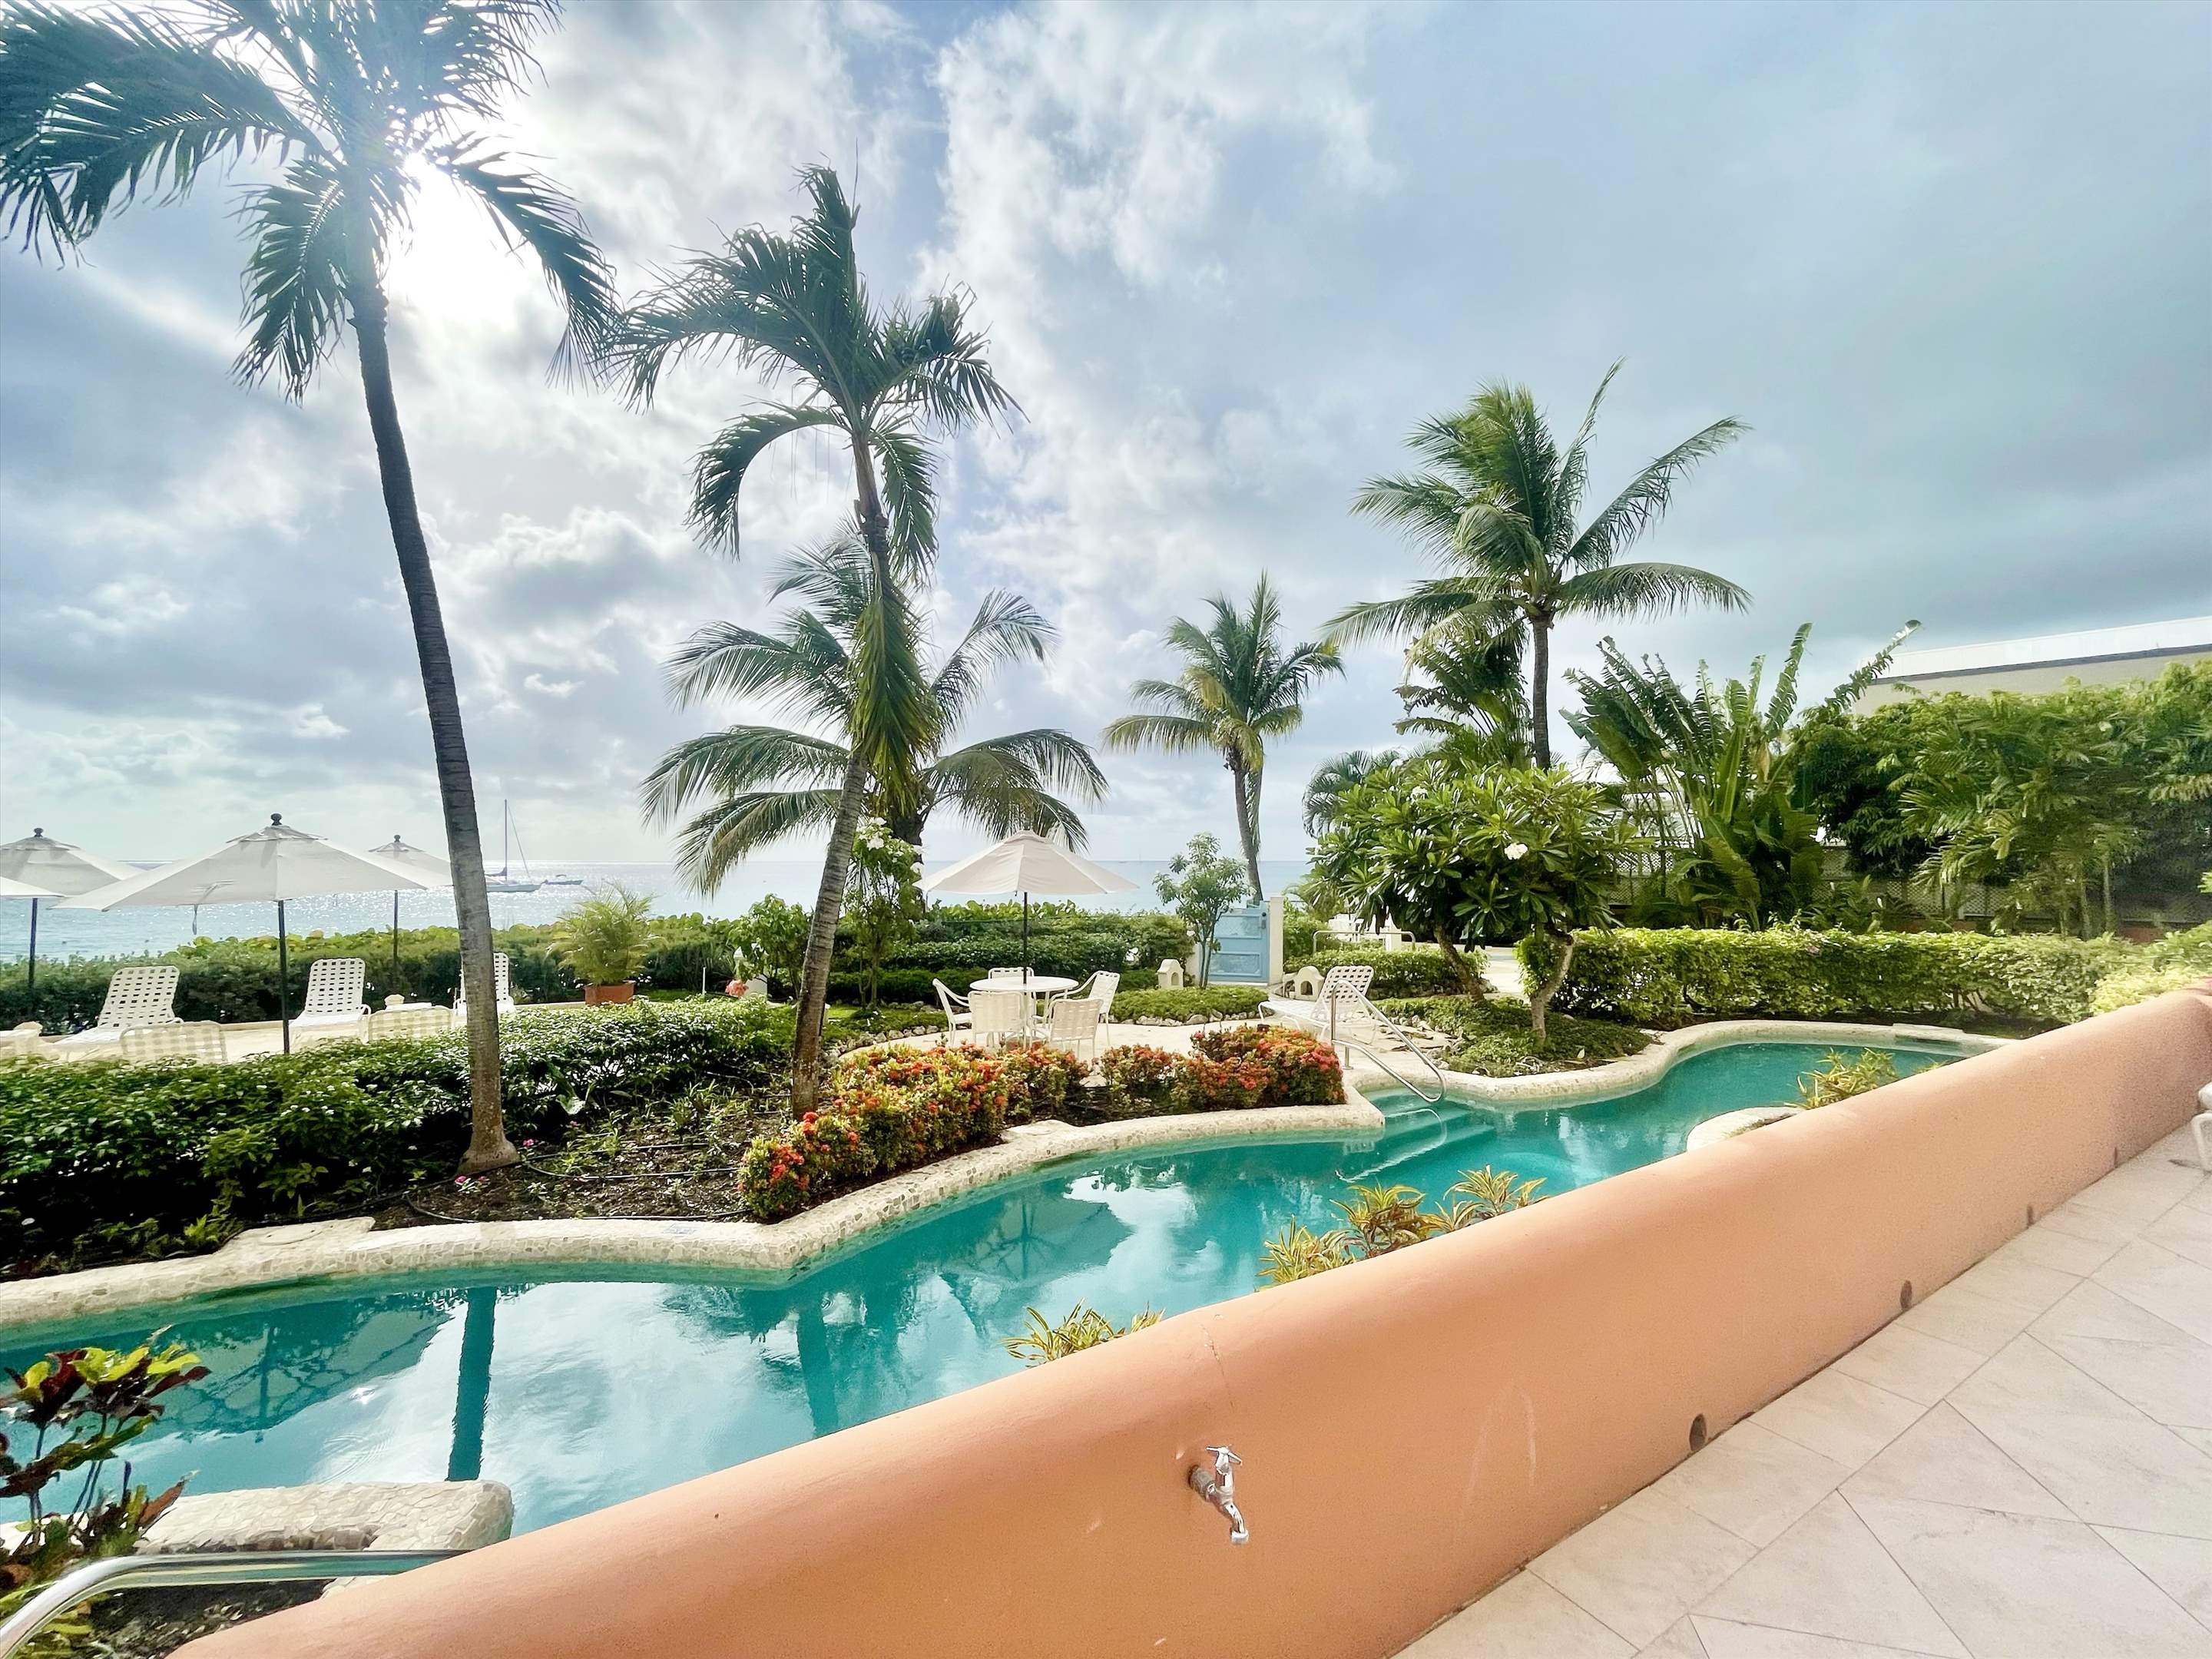 Villas on the Beach 103, 2 bedroom, 2 bedroom apartment in St. James & West Coast, Barbados Photo #7